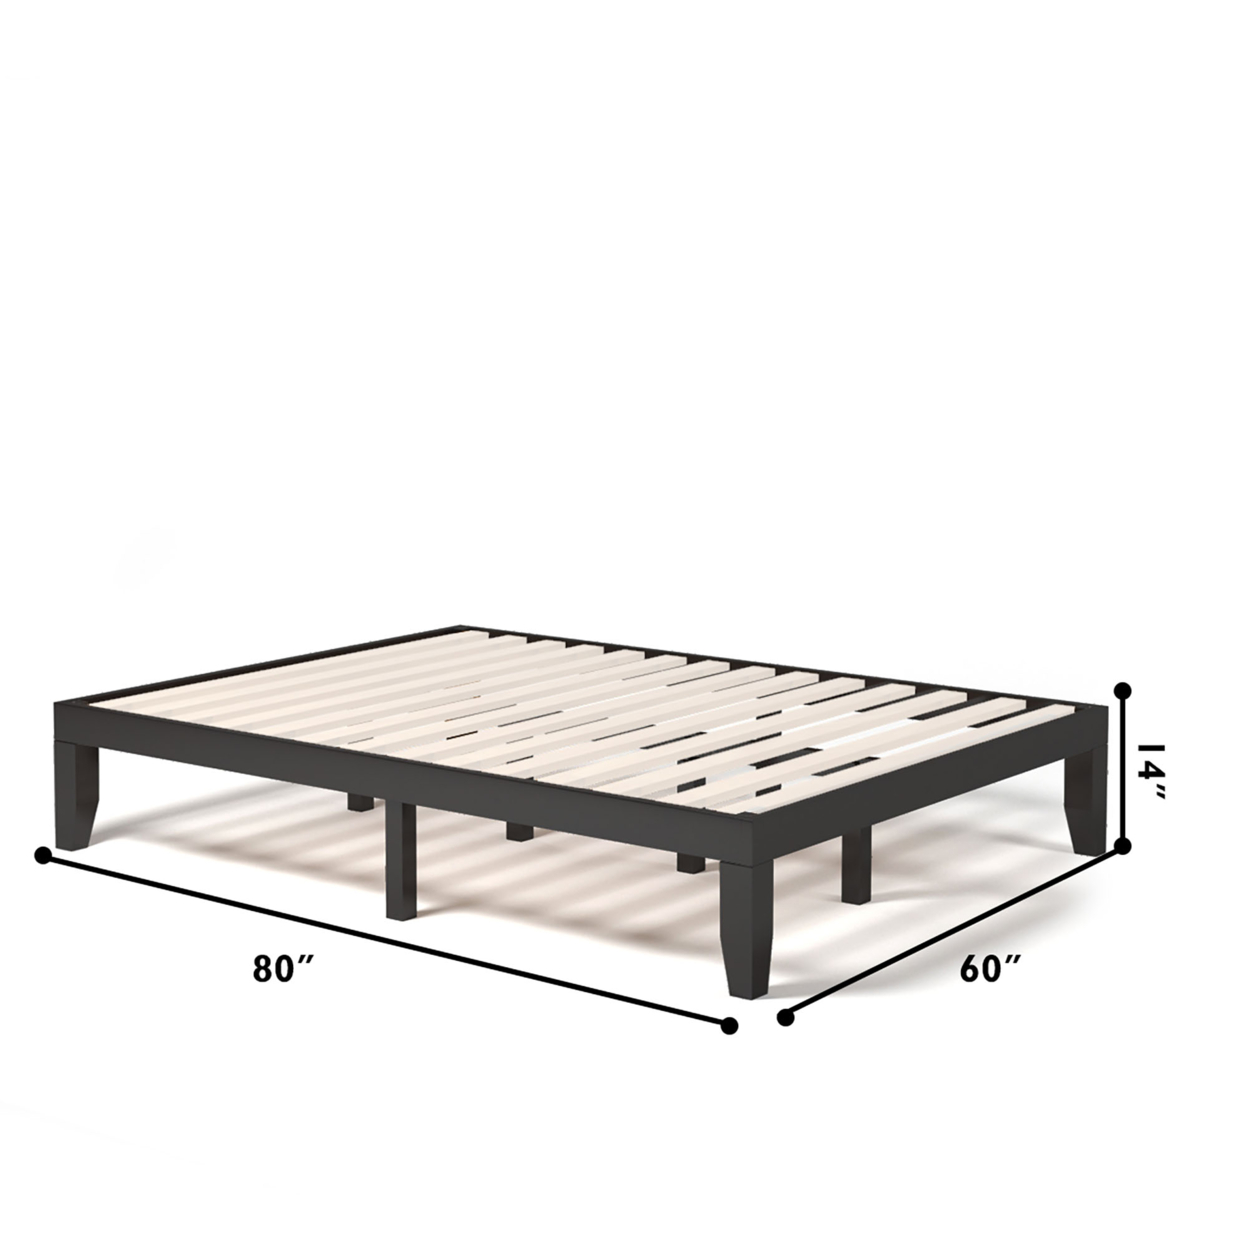 14'' Queen Size Wooden Platform Bed Frame W/ Strong Slat Support - Espresso